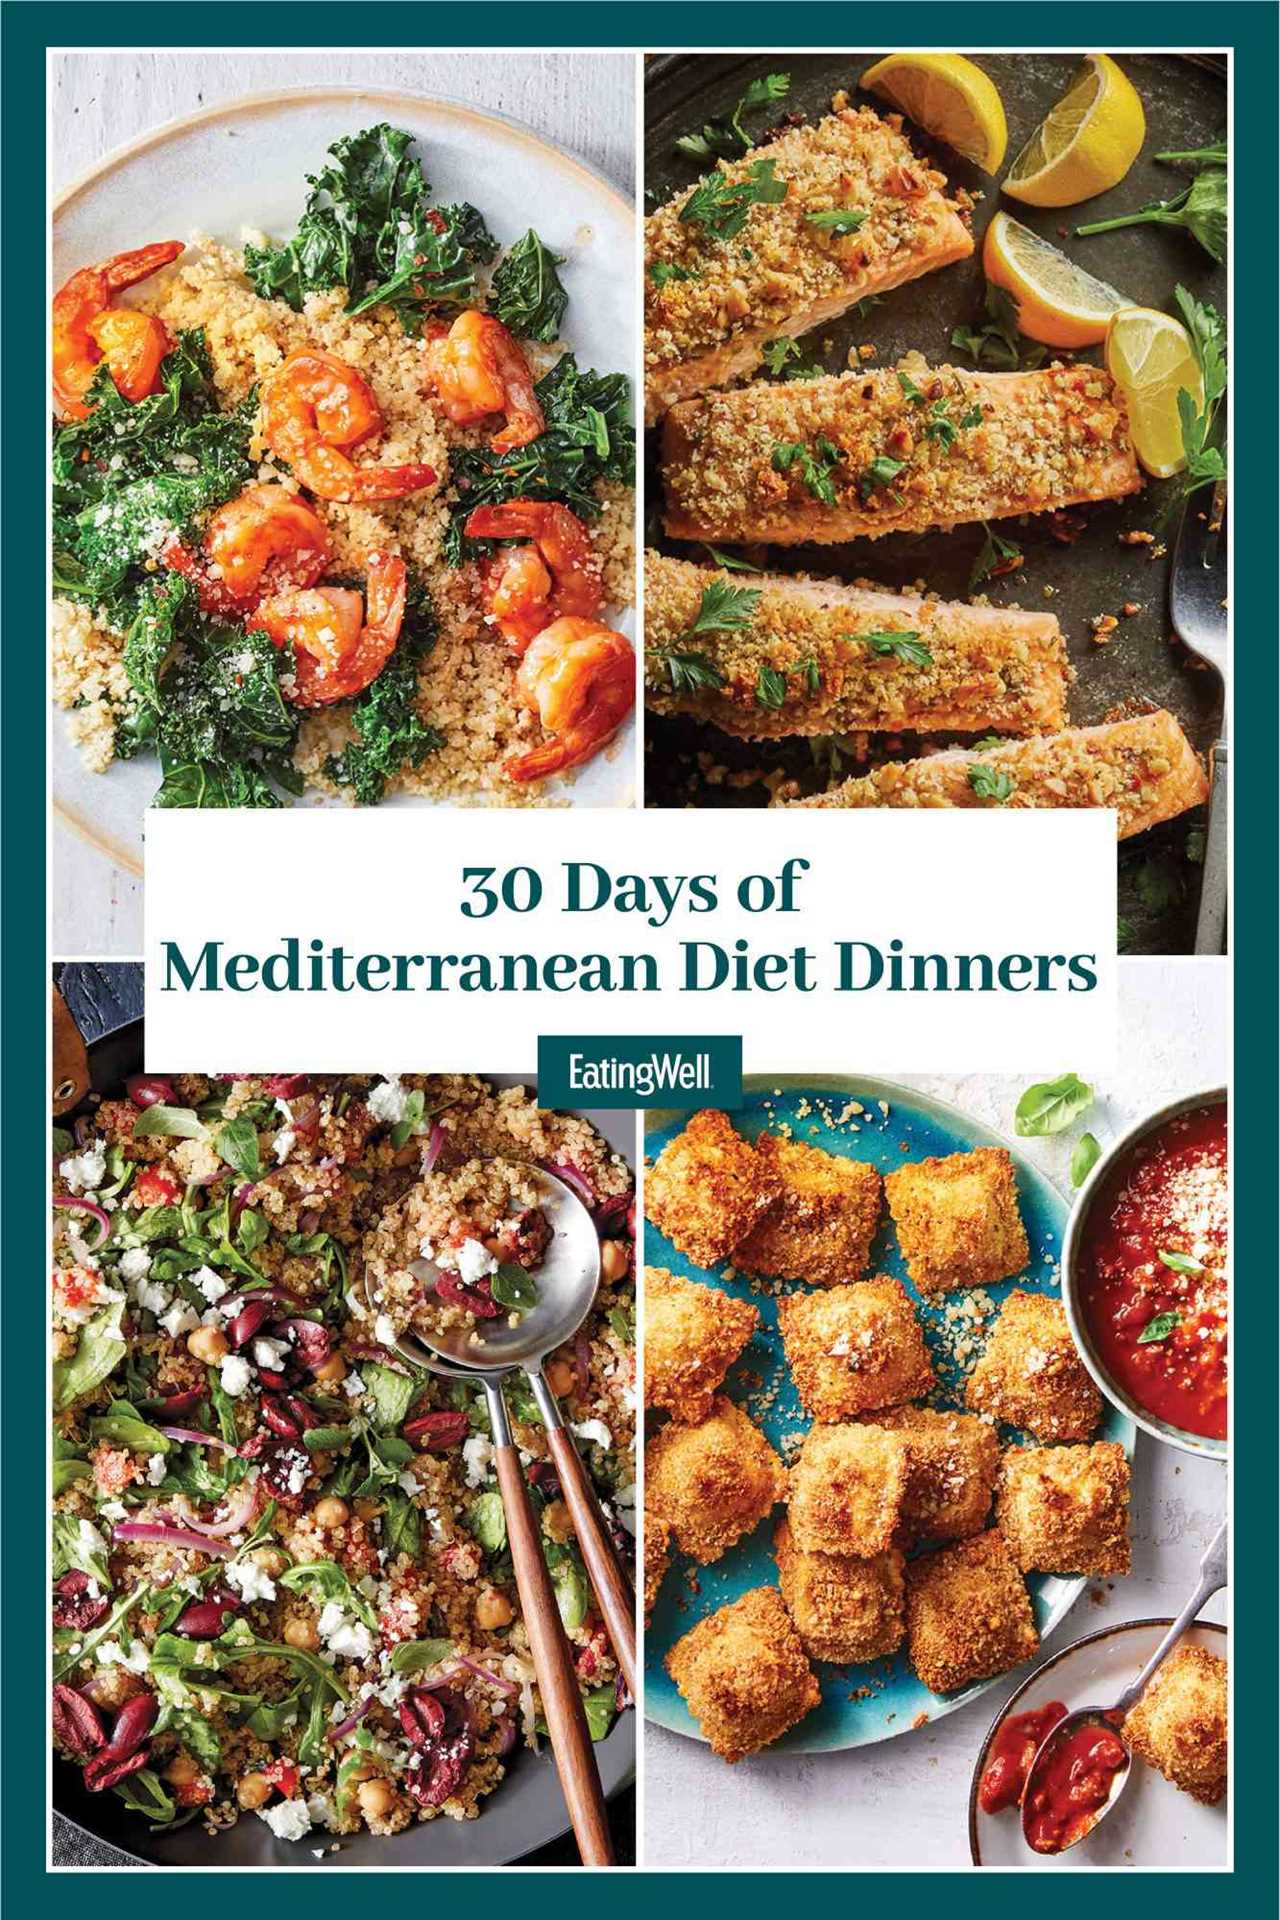 The 10 Week Mediterranean Diet Weight Loss Program